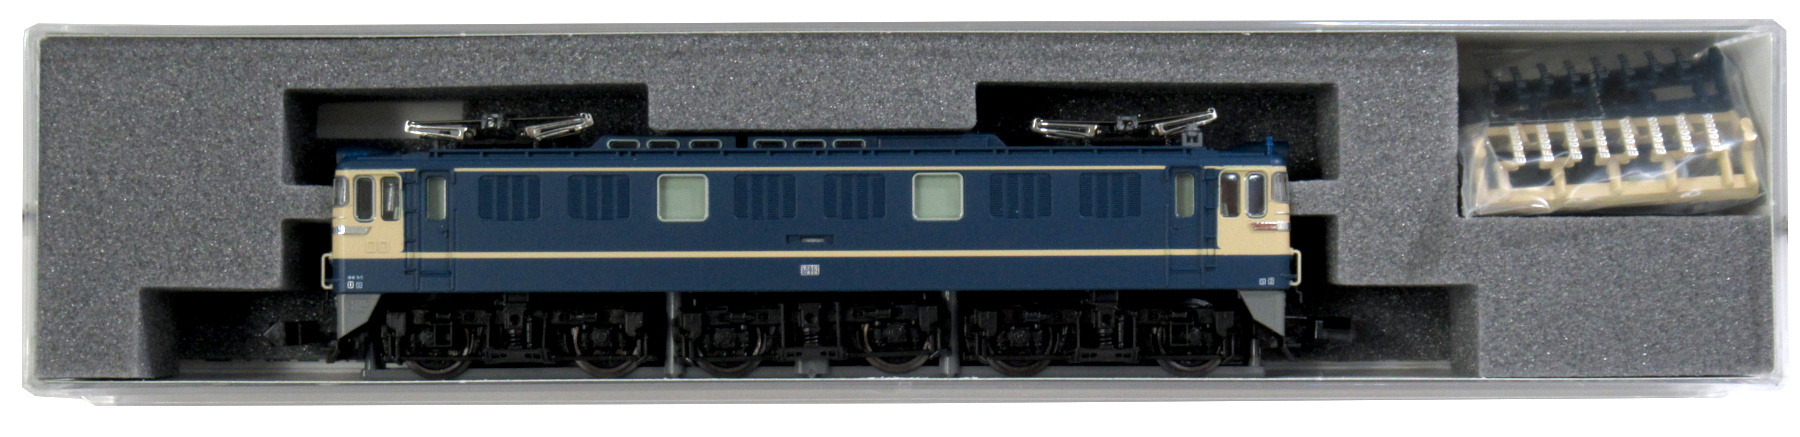 3094-4 EF60 500番台 特急色